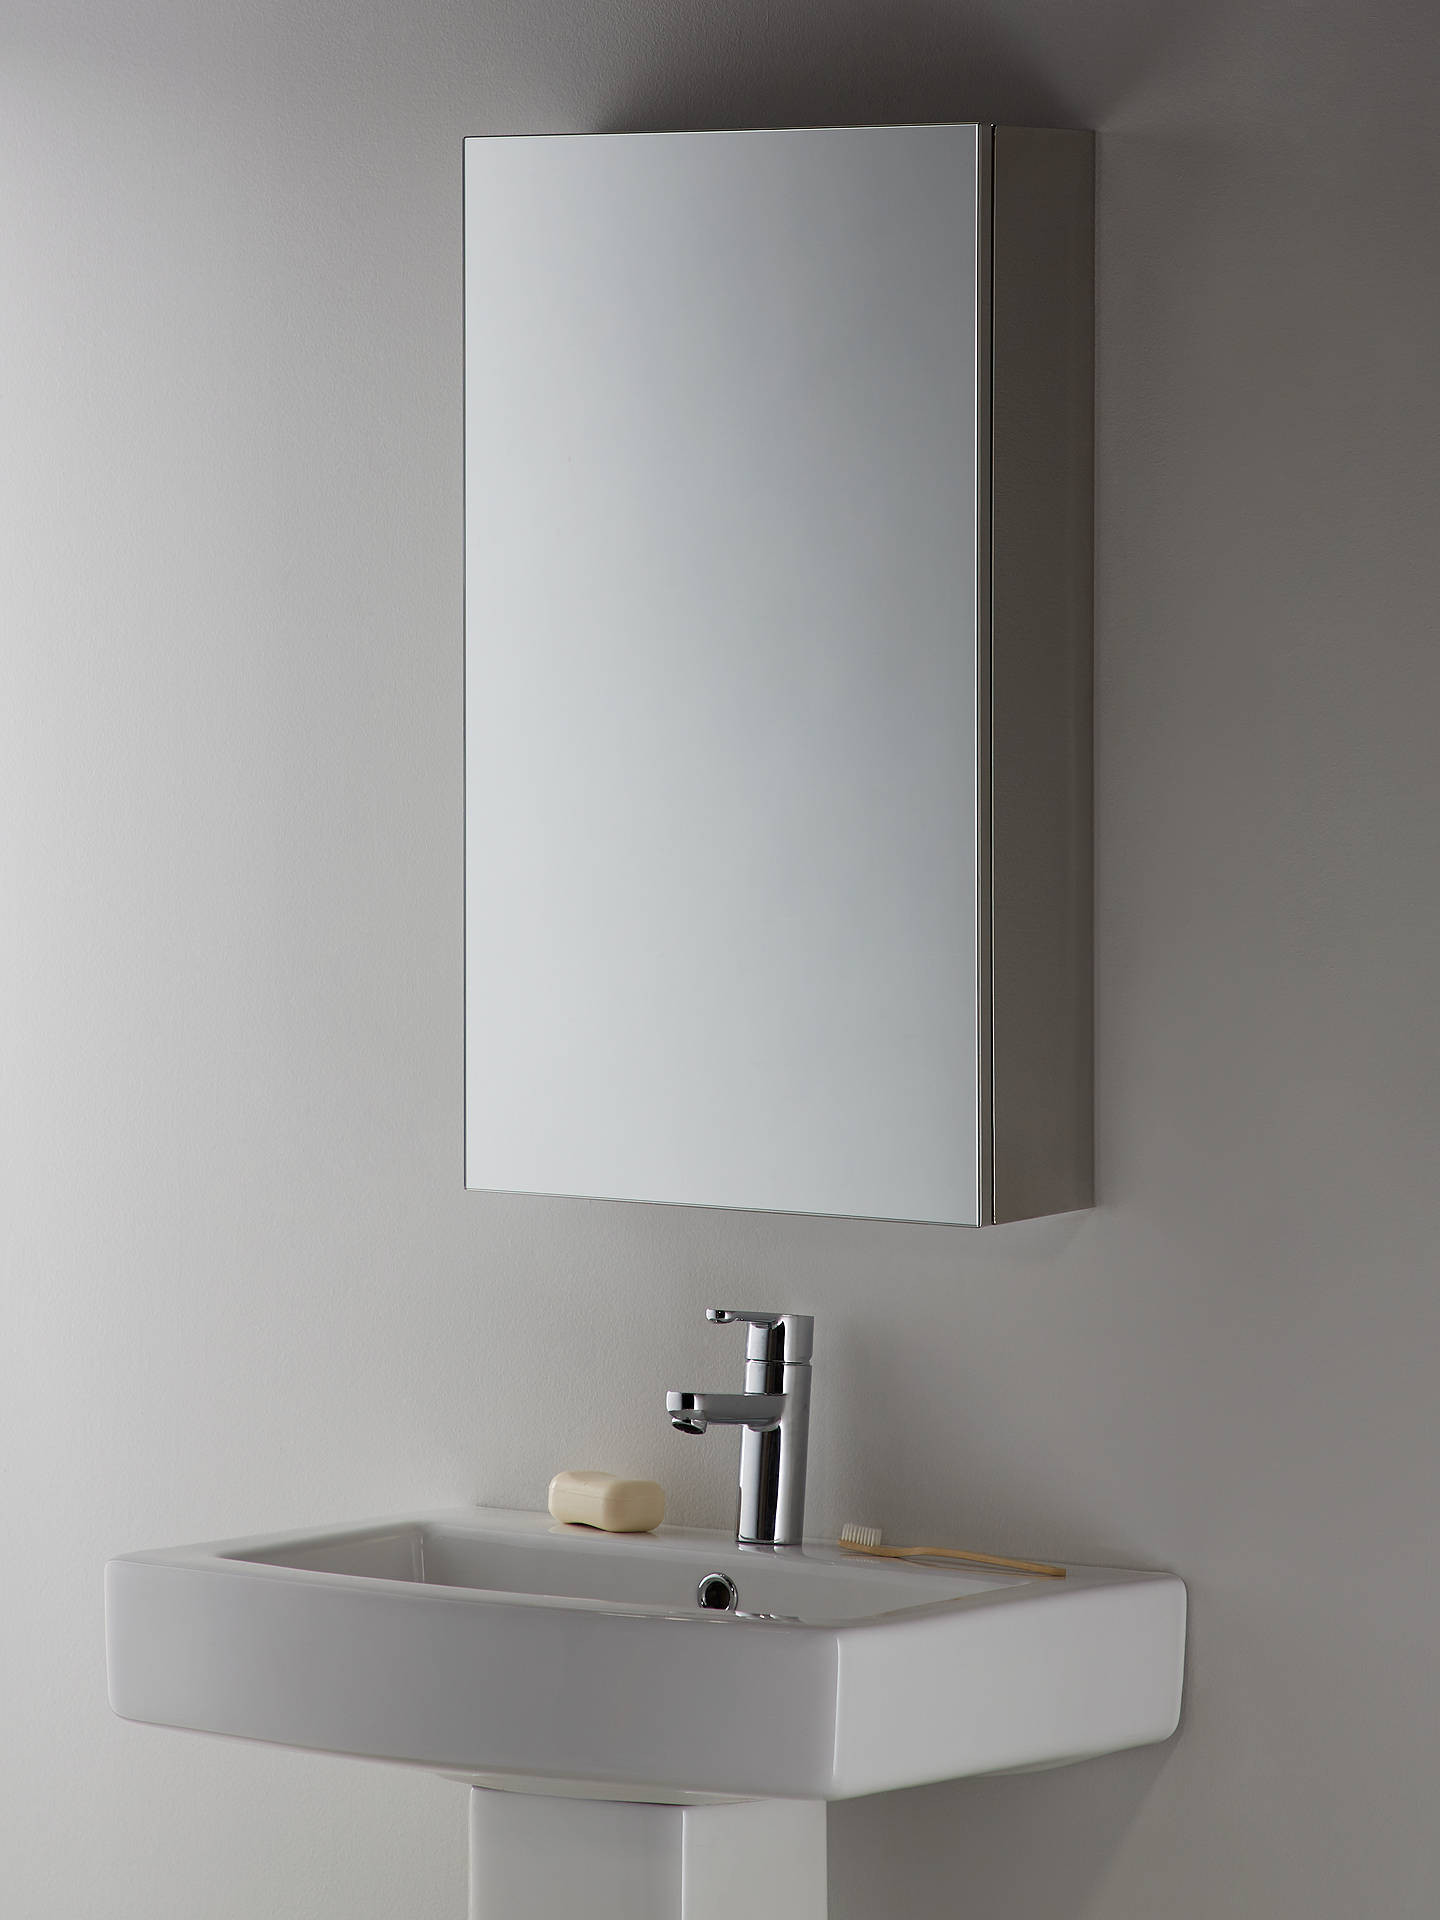 Bathroom Cabinet Mirror
 John Lewis & Partners Single Mirrored Bathroom Cabinet